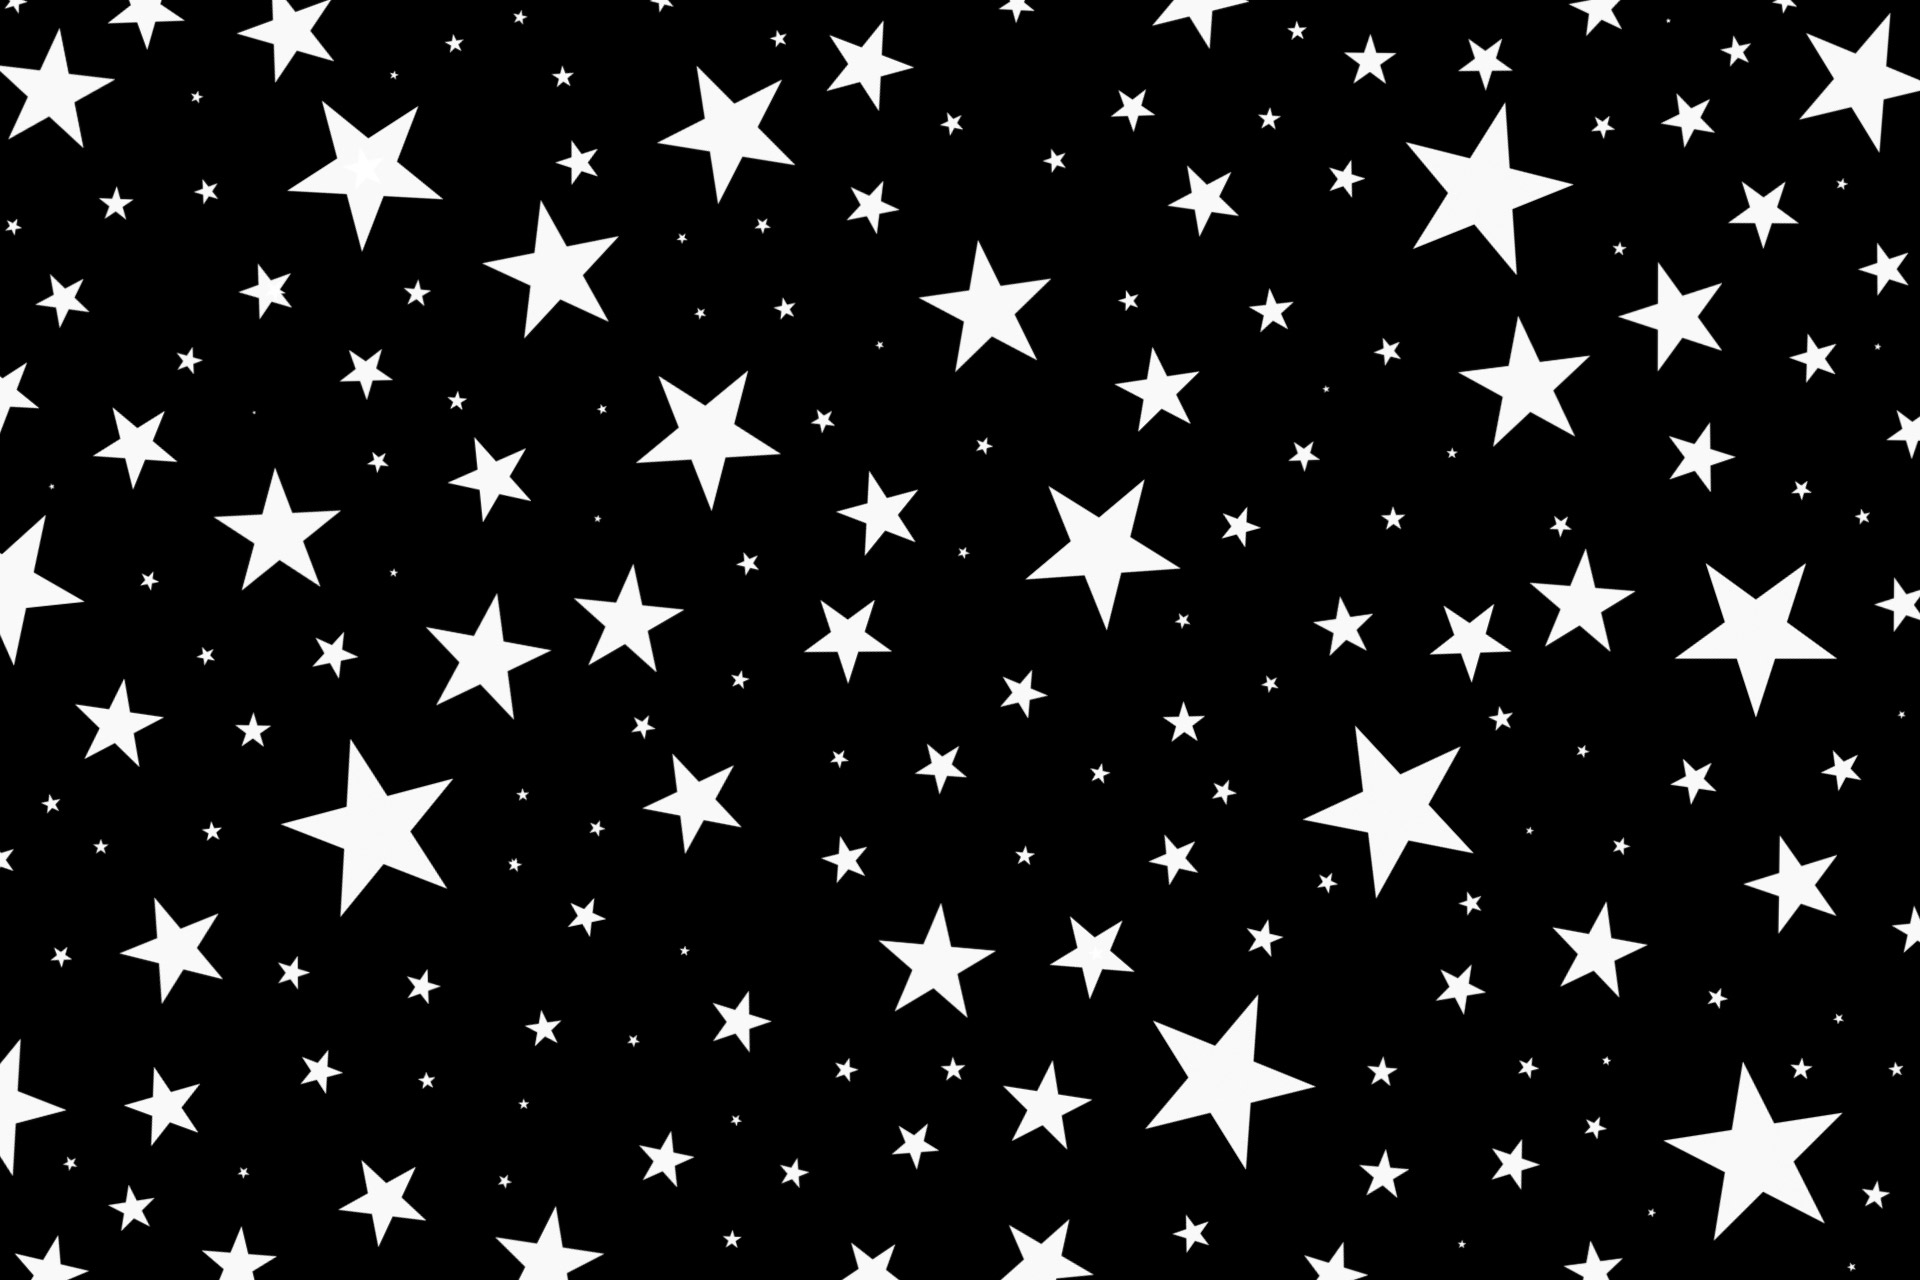 Star Wallpaper with Black Background for Desktop - Black Wallpaper HD